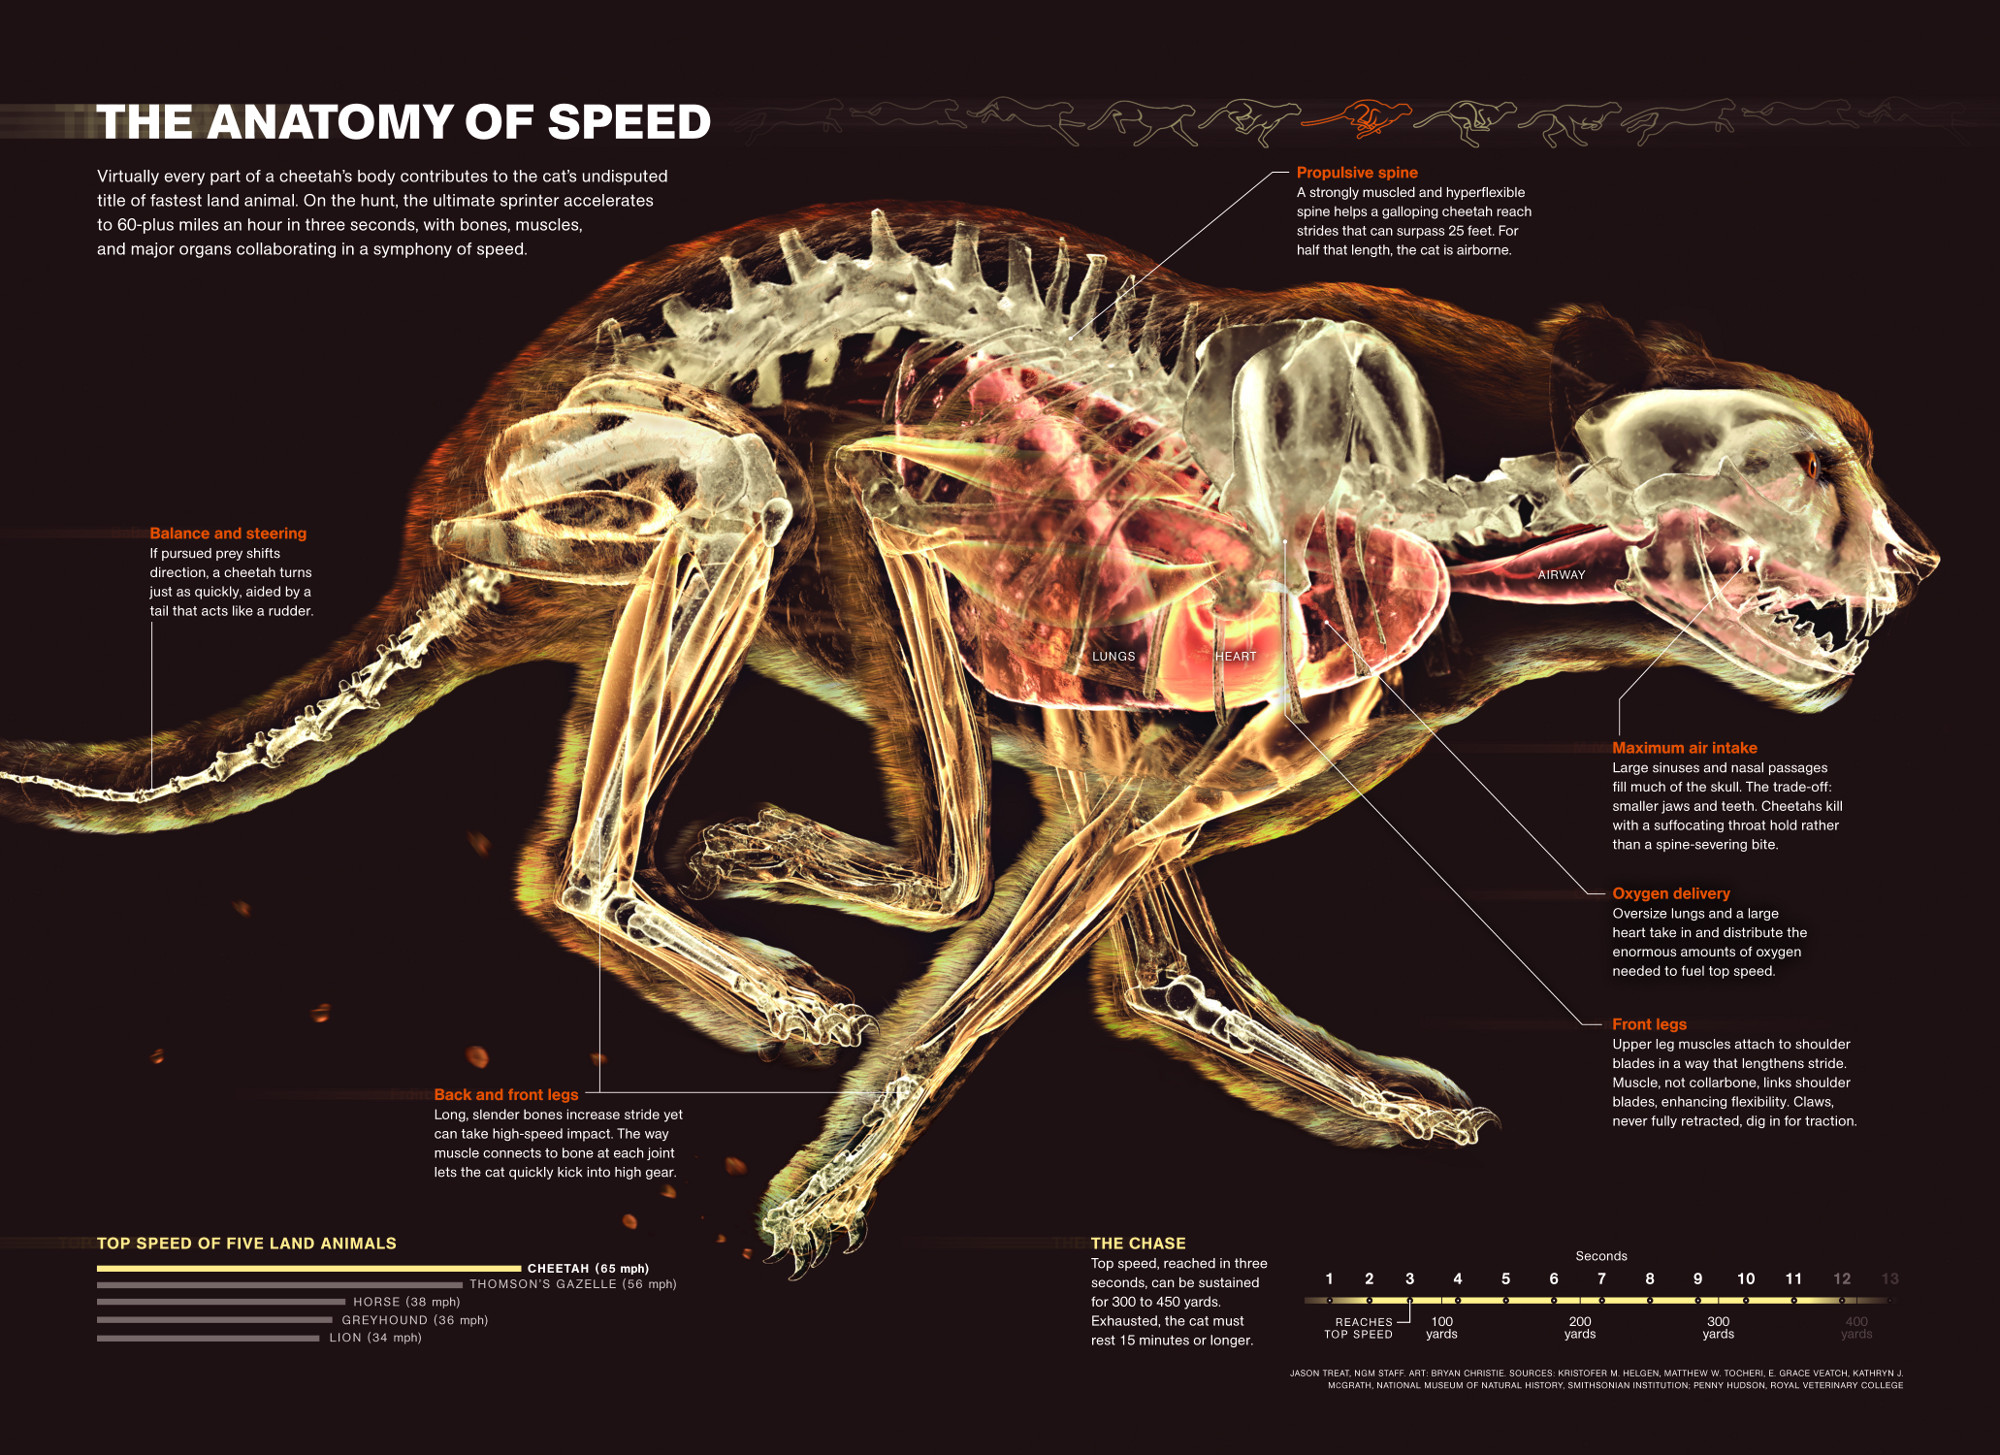 The Anatomy of Speed, by Jason Treat & Bryan Christie